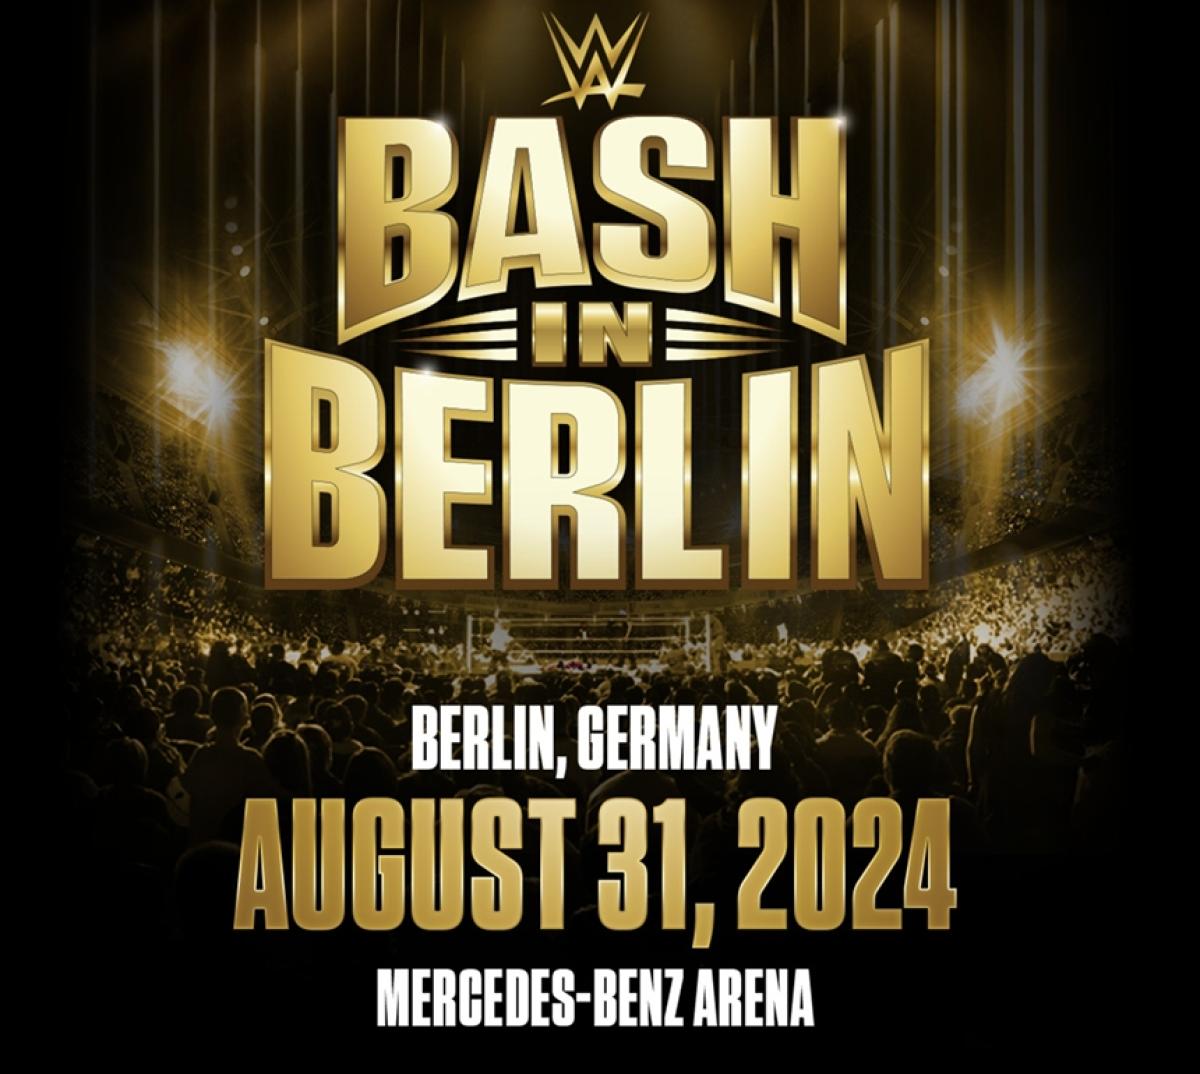 WWE Live - Bash in Berlin in der Uber Arena Tickets